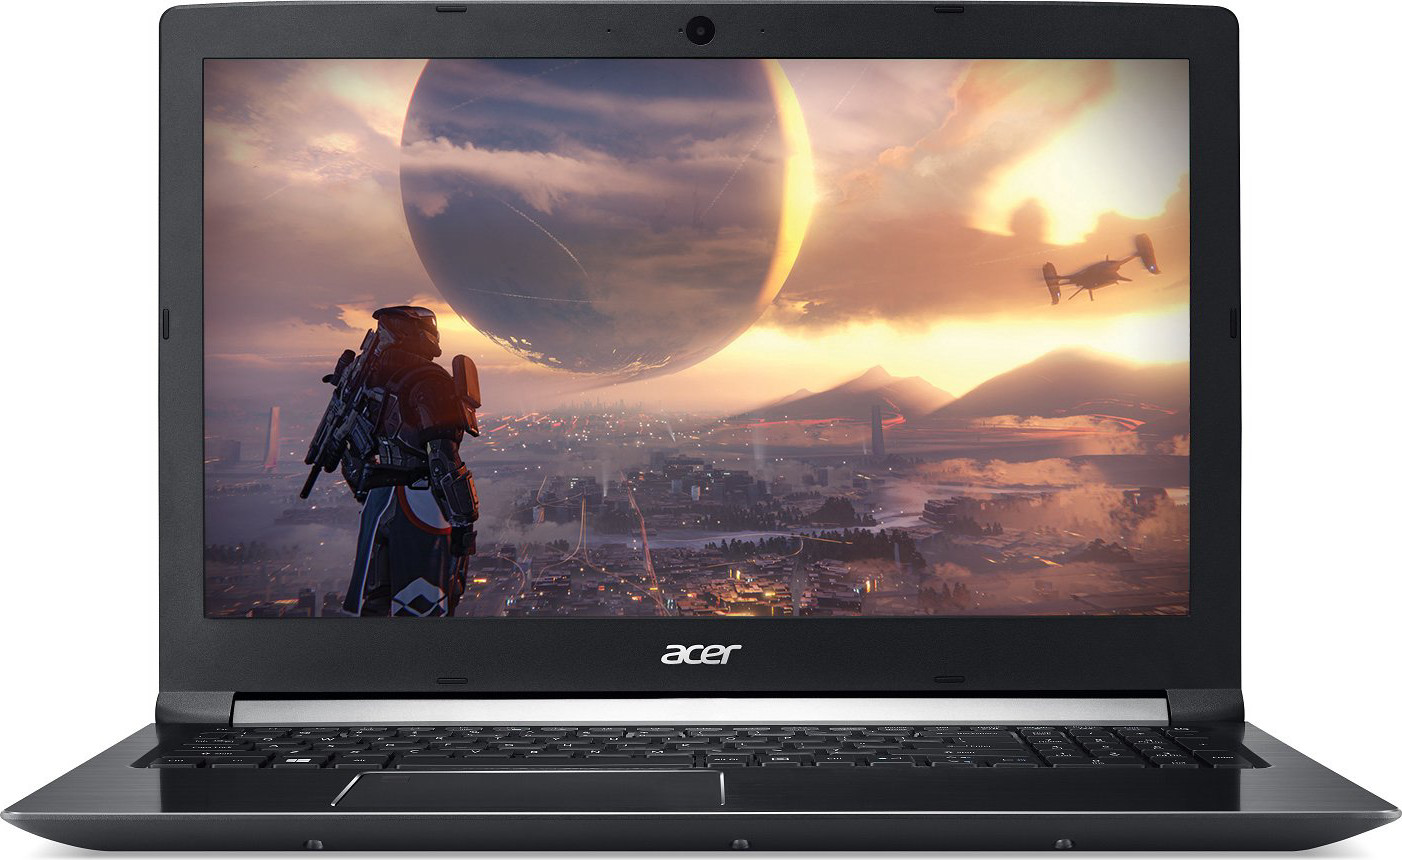 Acer Aspire 7 Casual Gaming Laptop, 15.6" Full HD IPS Display, Intel 6-Core i7-8750H, NVIDIA GeForce GTX 1050Ti 4GB, 8GB DDR4, 128GB SSD + 1TB HDD, Fingerprint Reader, Windows 10 64bit, A715-72G-71CT